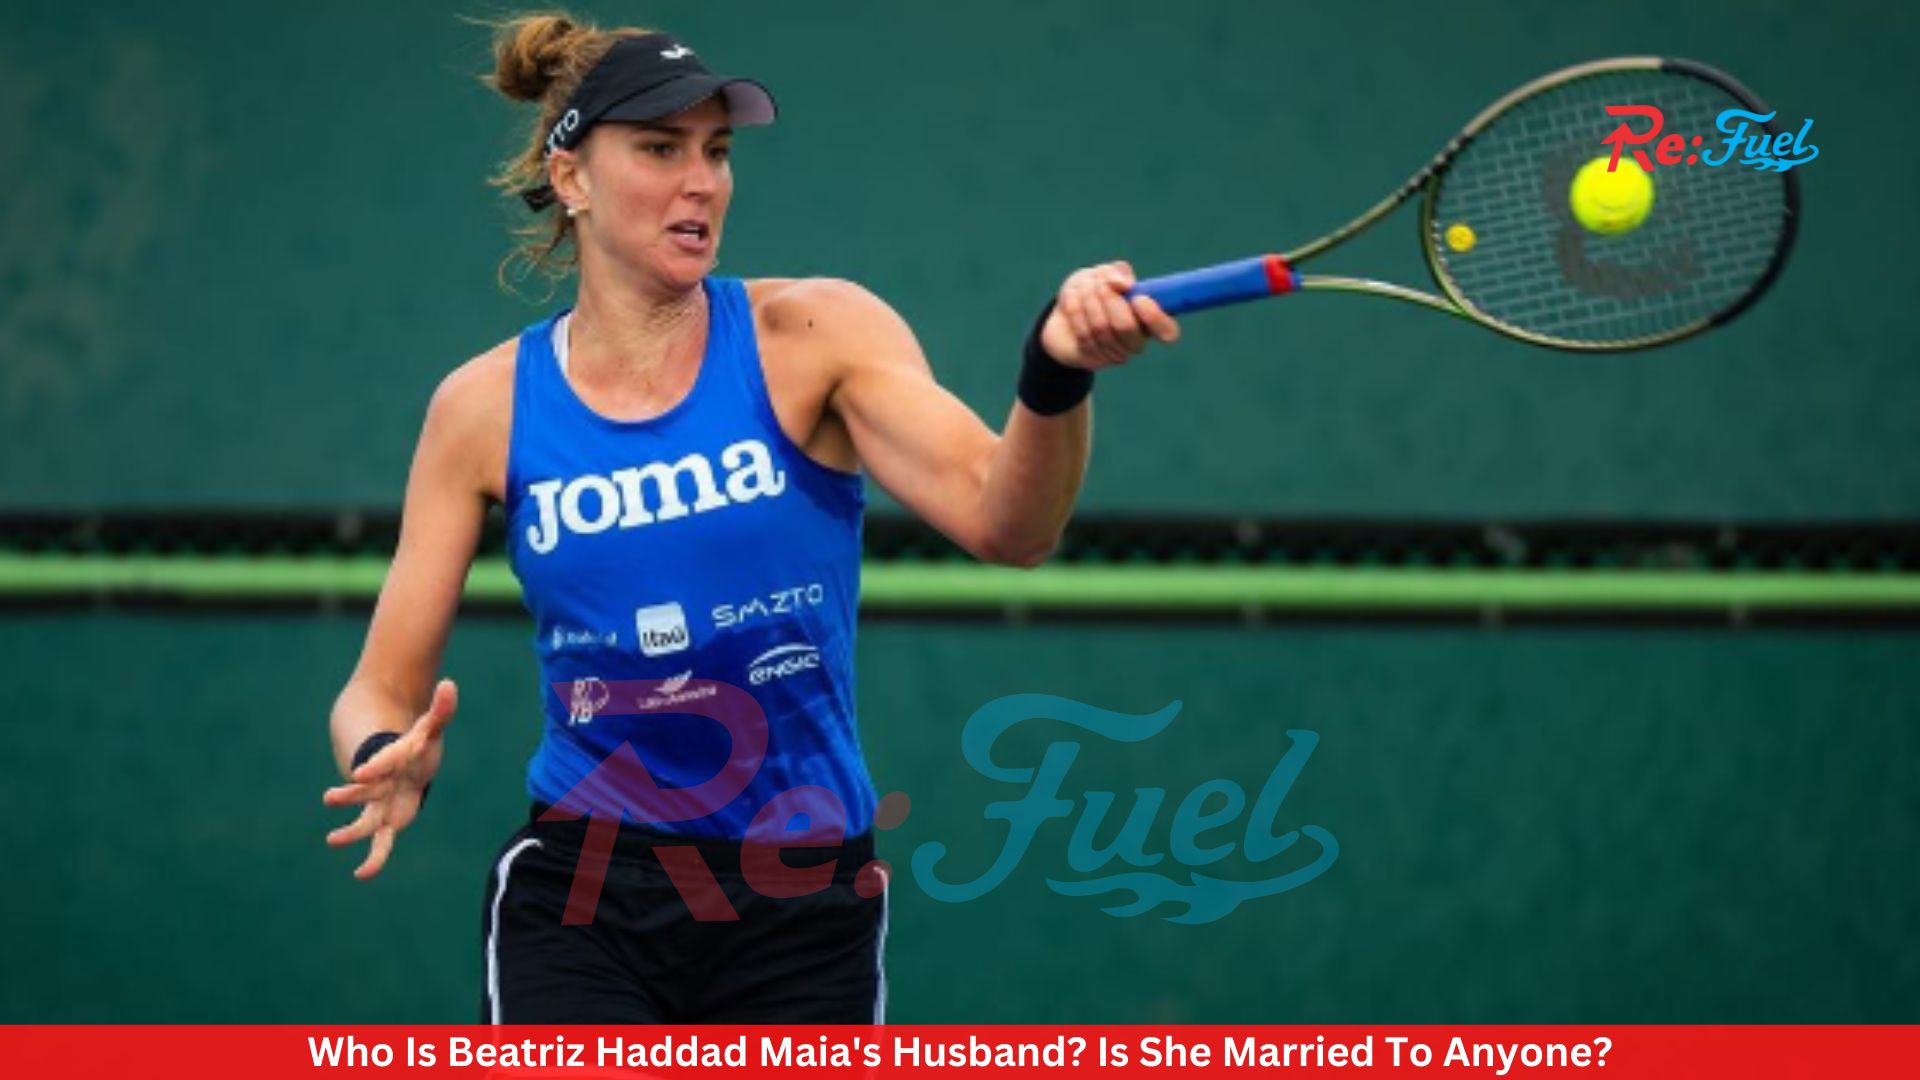 Who Is Beatriz Haddad Maia's Husband? Is She Married To Anyone?